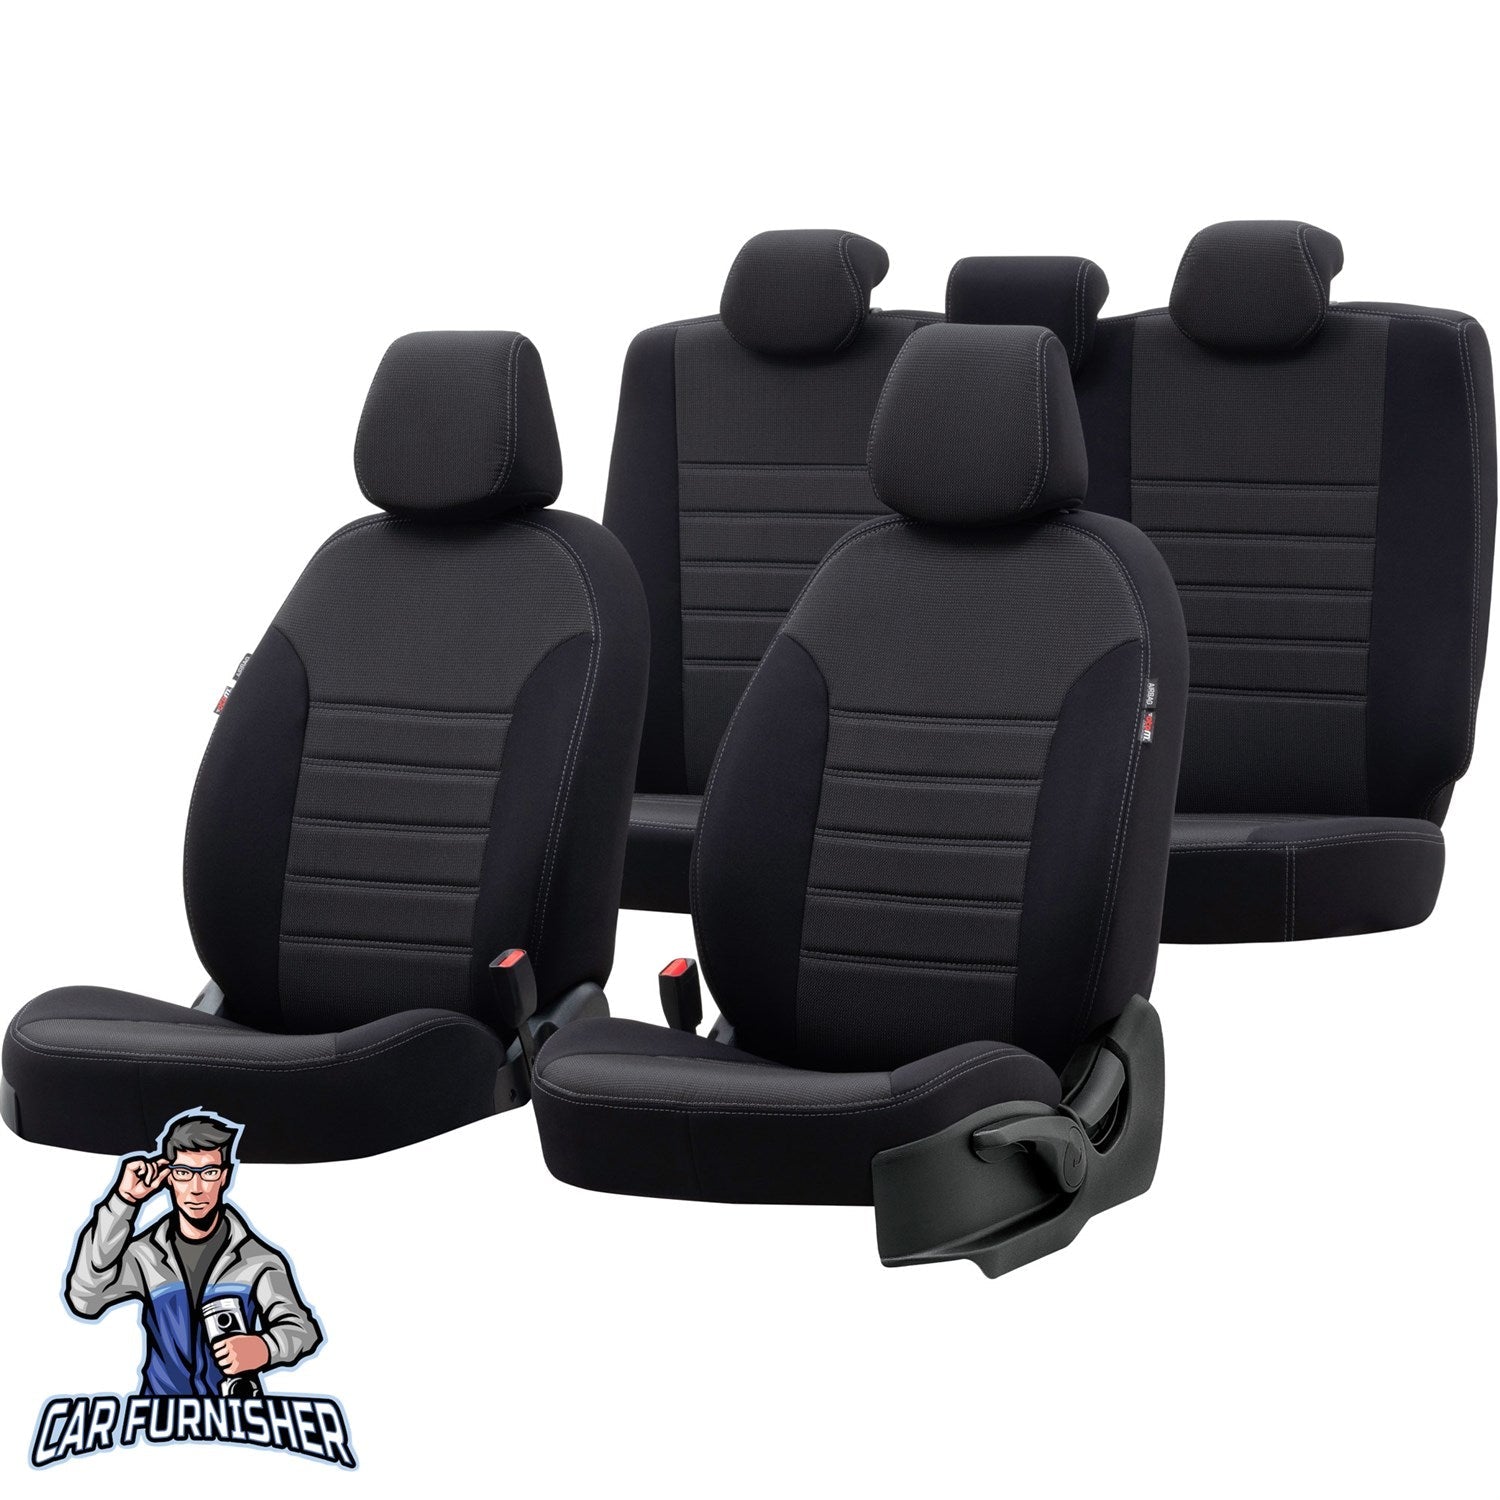 Tata Xenon Seat Covers Original Jacquard Design Dark Gray Jacquard Fabric